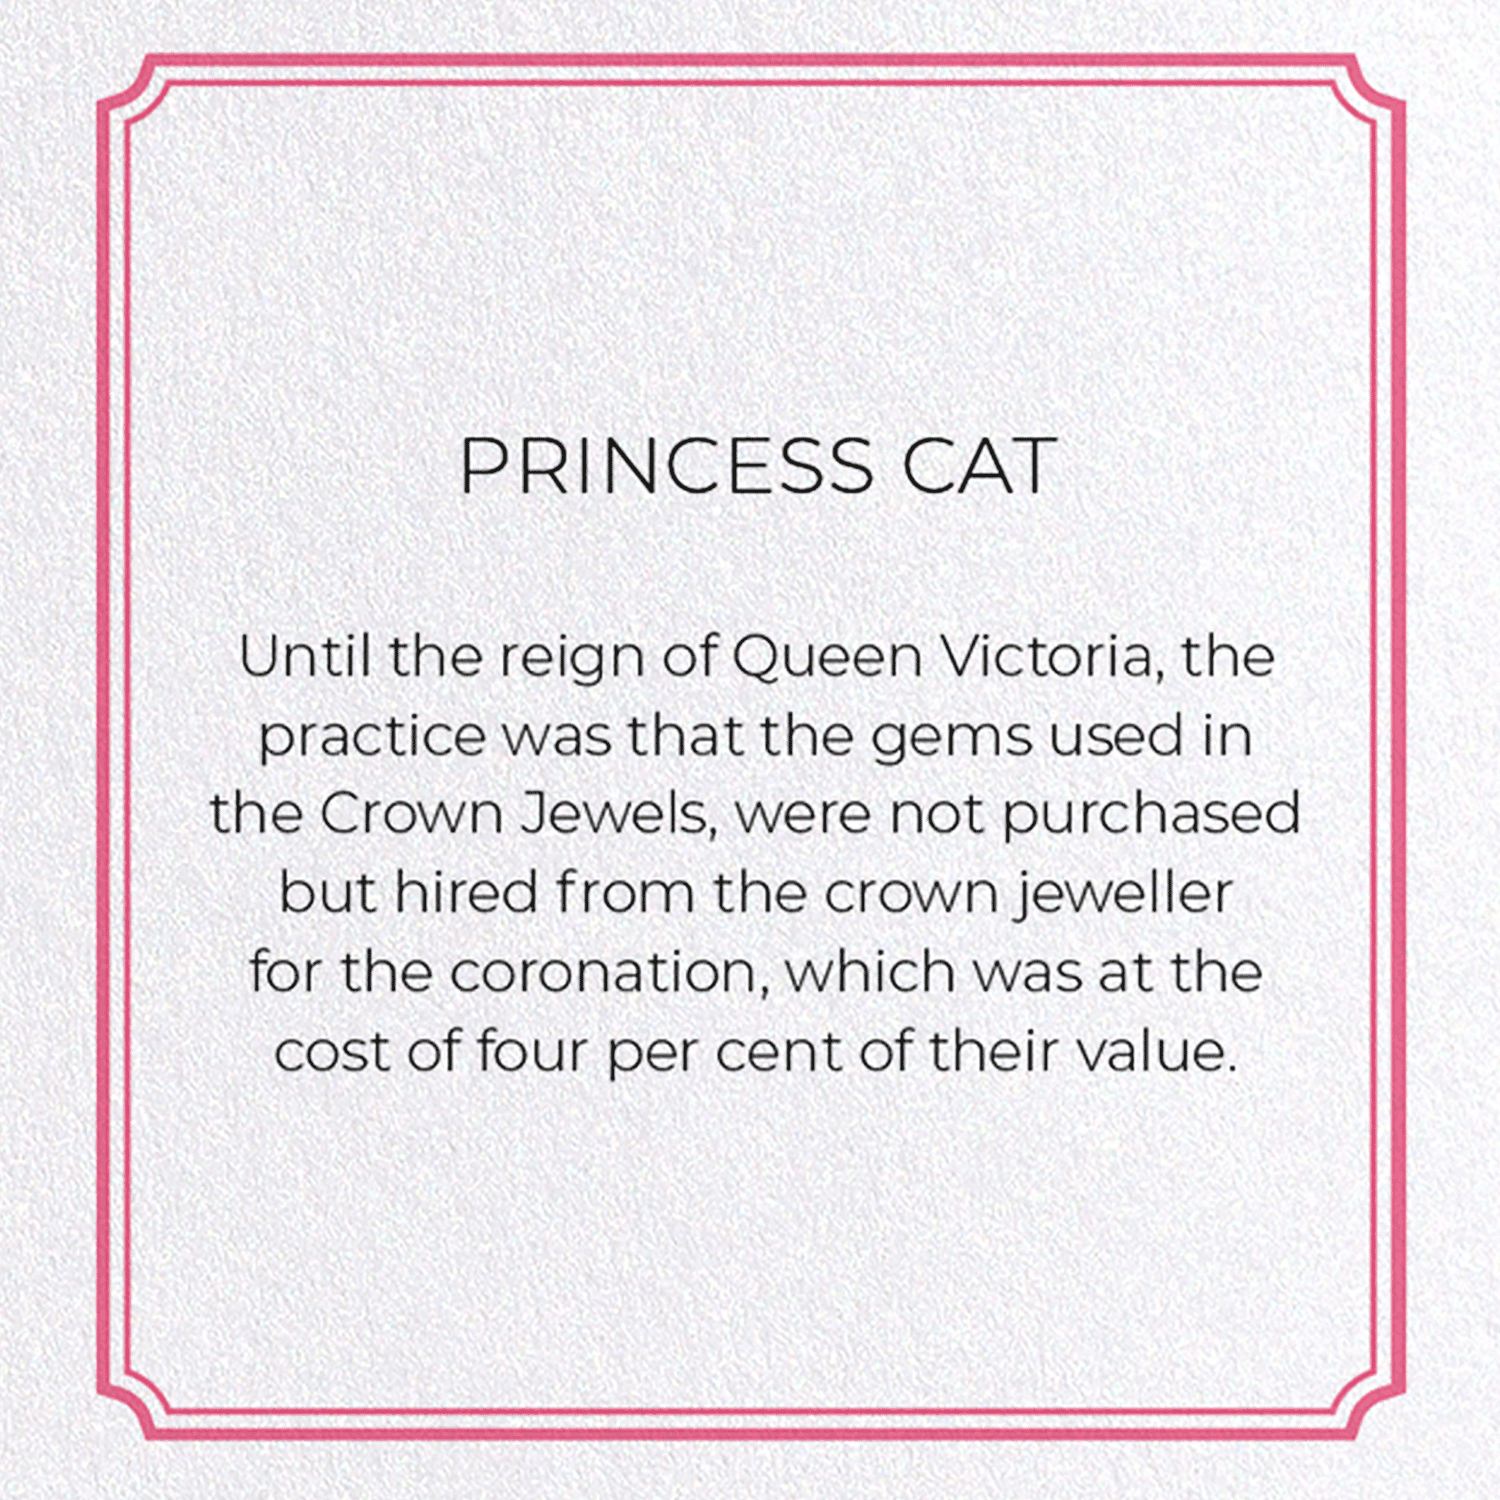 PRINCESS CAT: Vintage Greeting Card